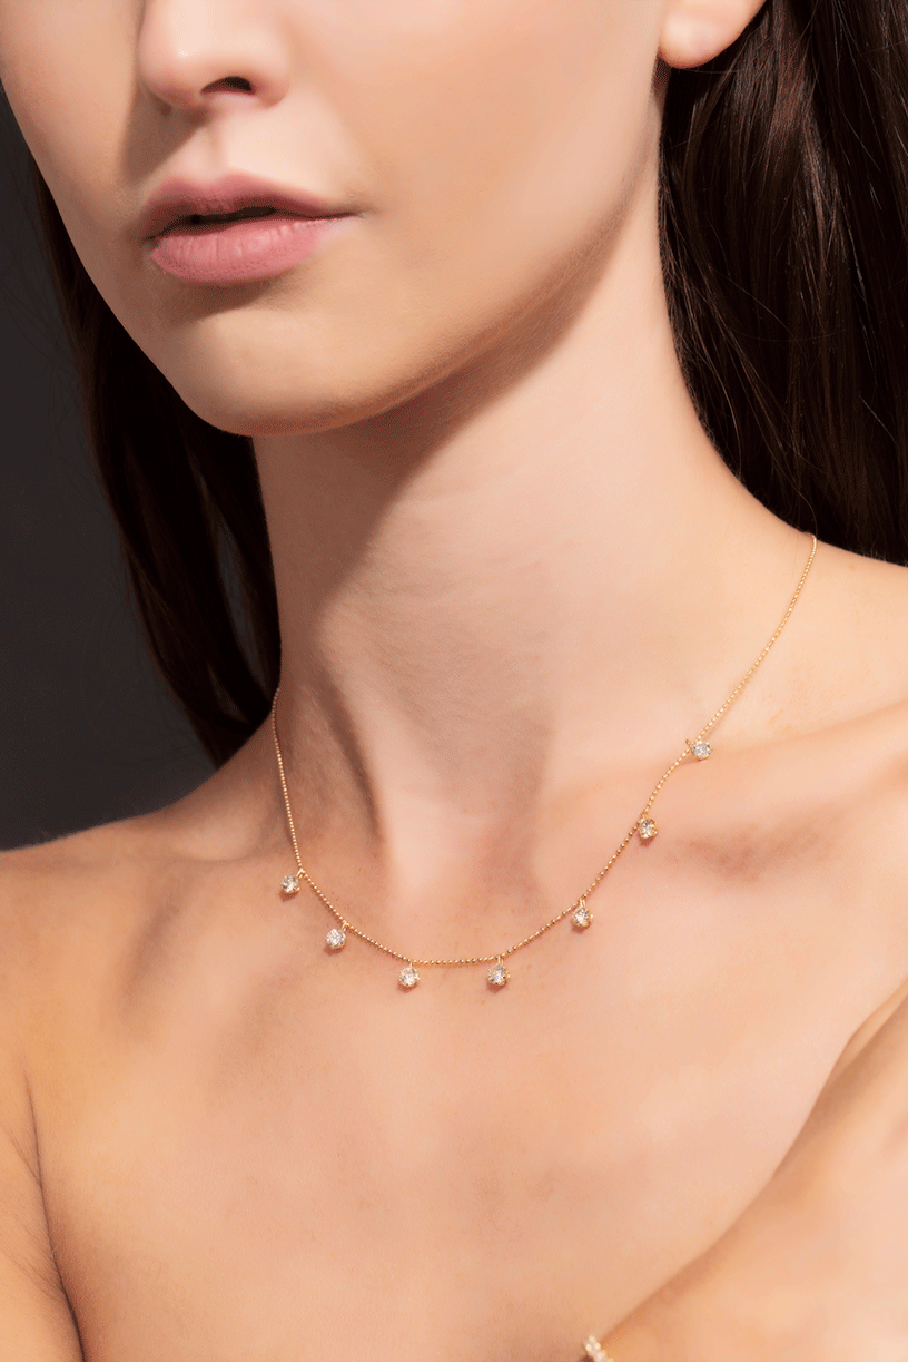 Fine White Gold Floating Diamond Necklace - ShopperBoard